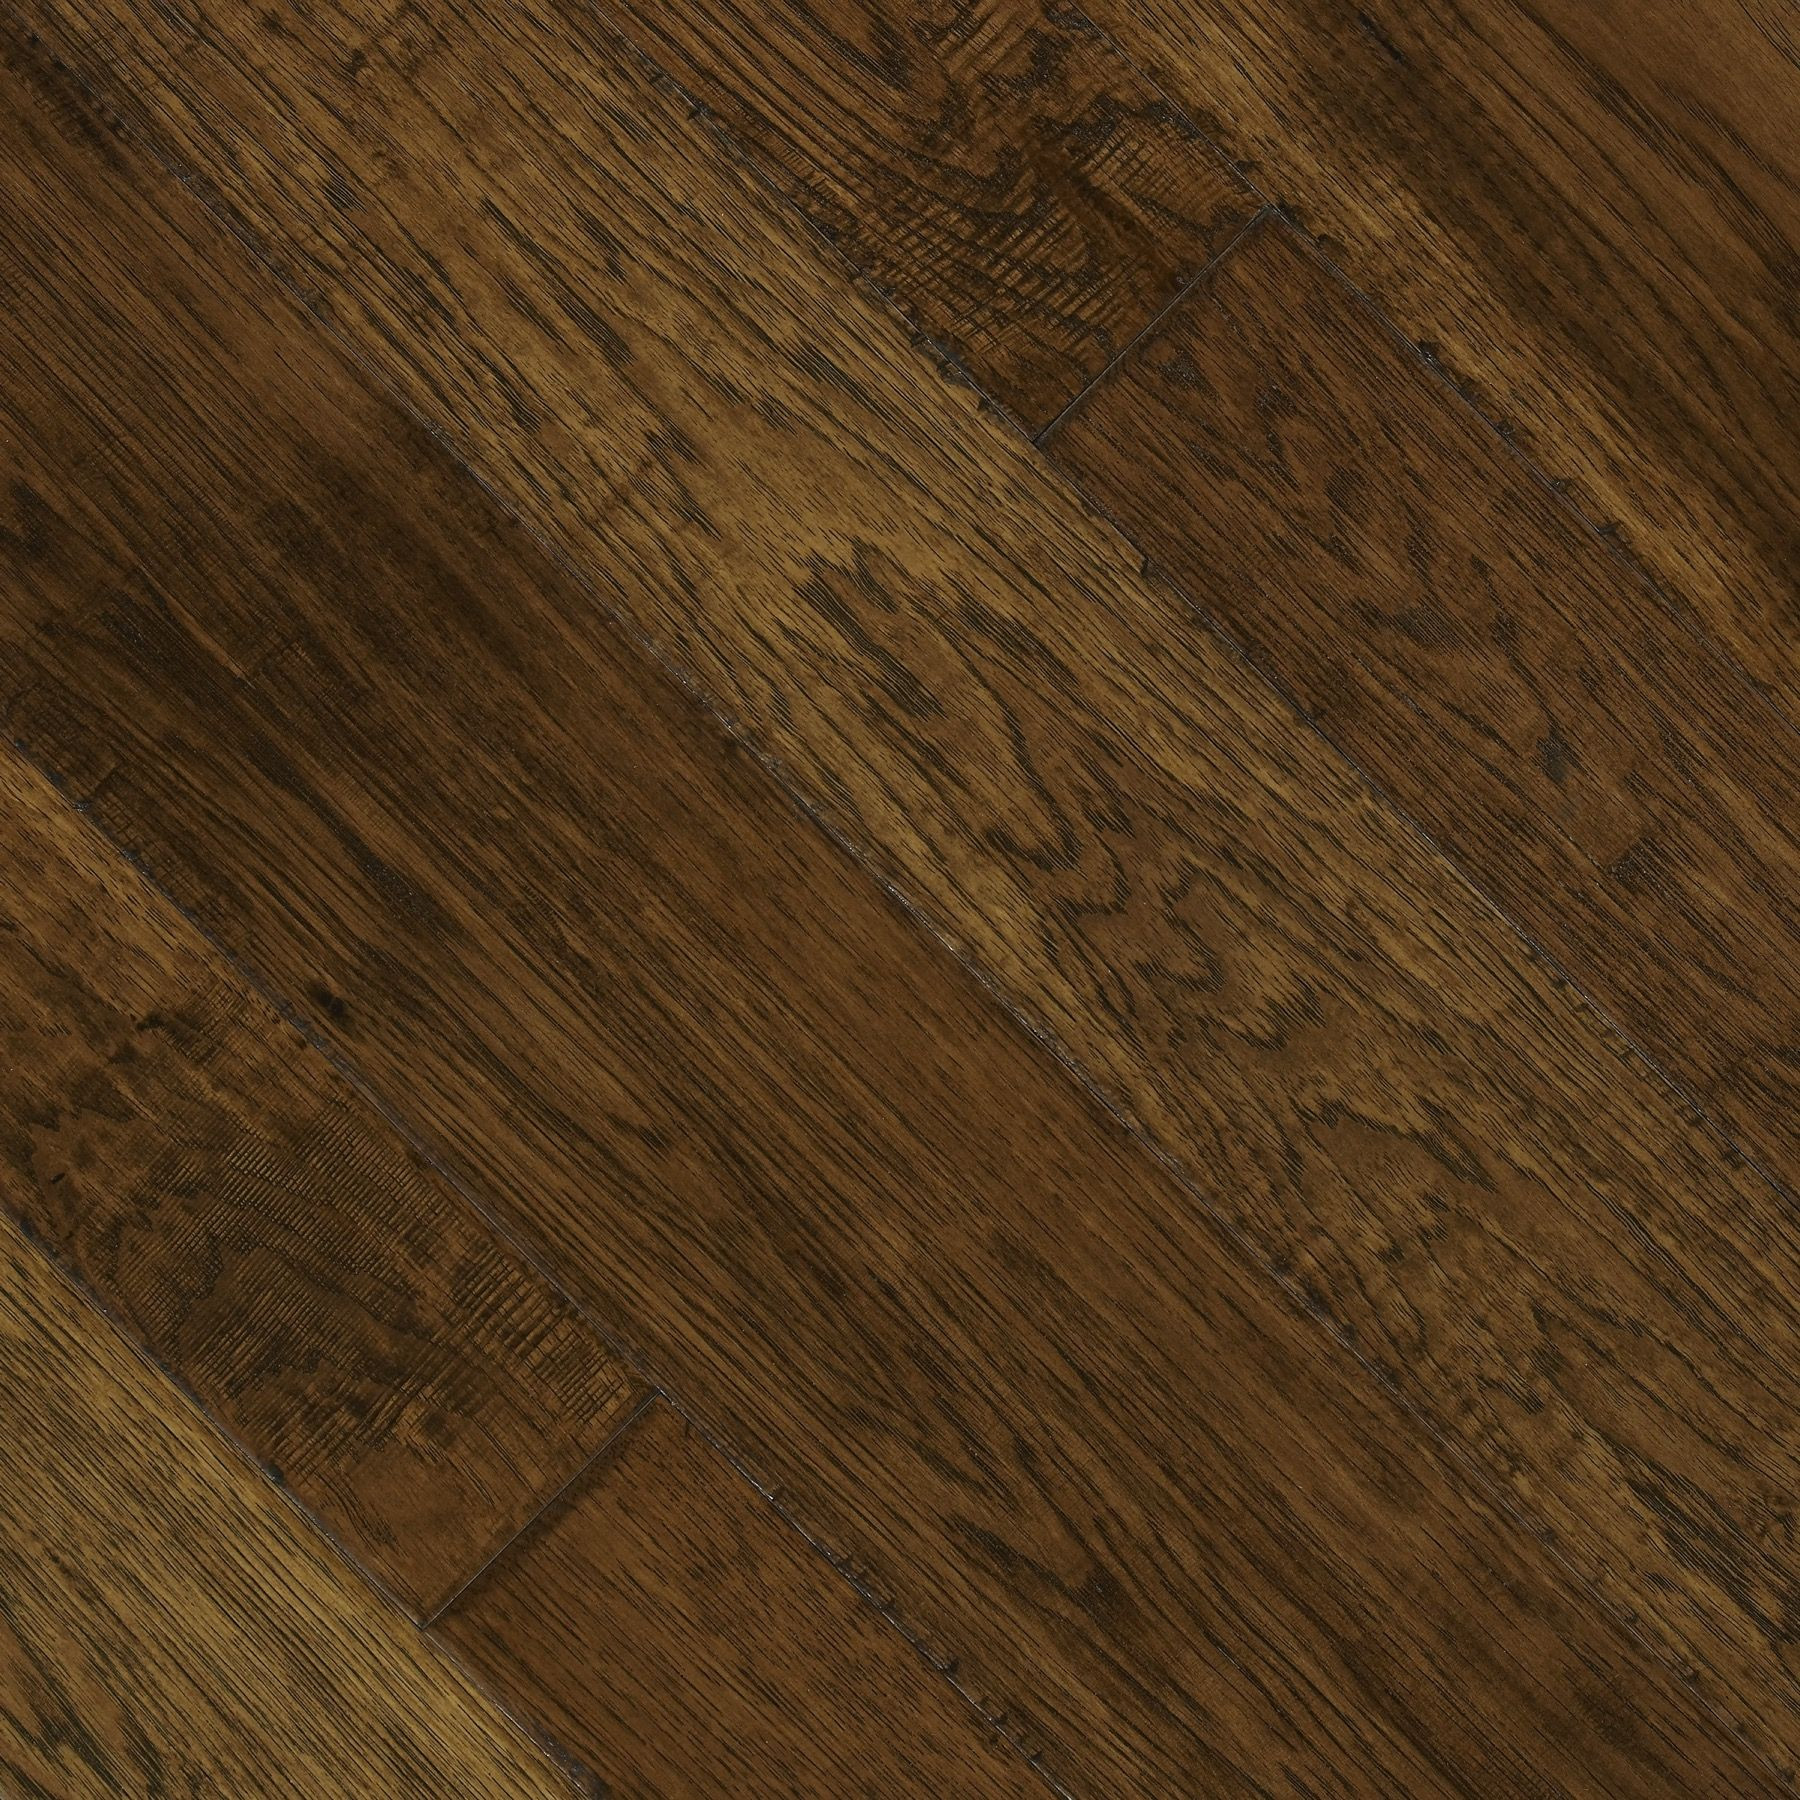 hardwood floor finish options of chalet hickory whistler pre finished wood floors pinterest woods within chalet hickory whistler